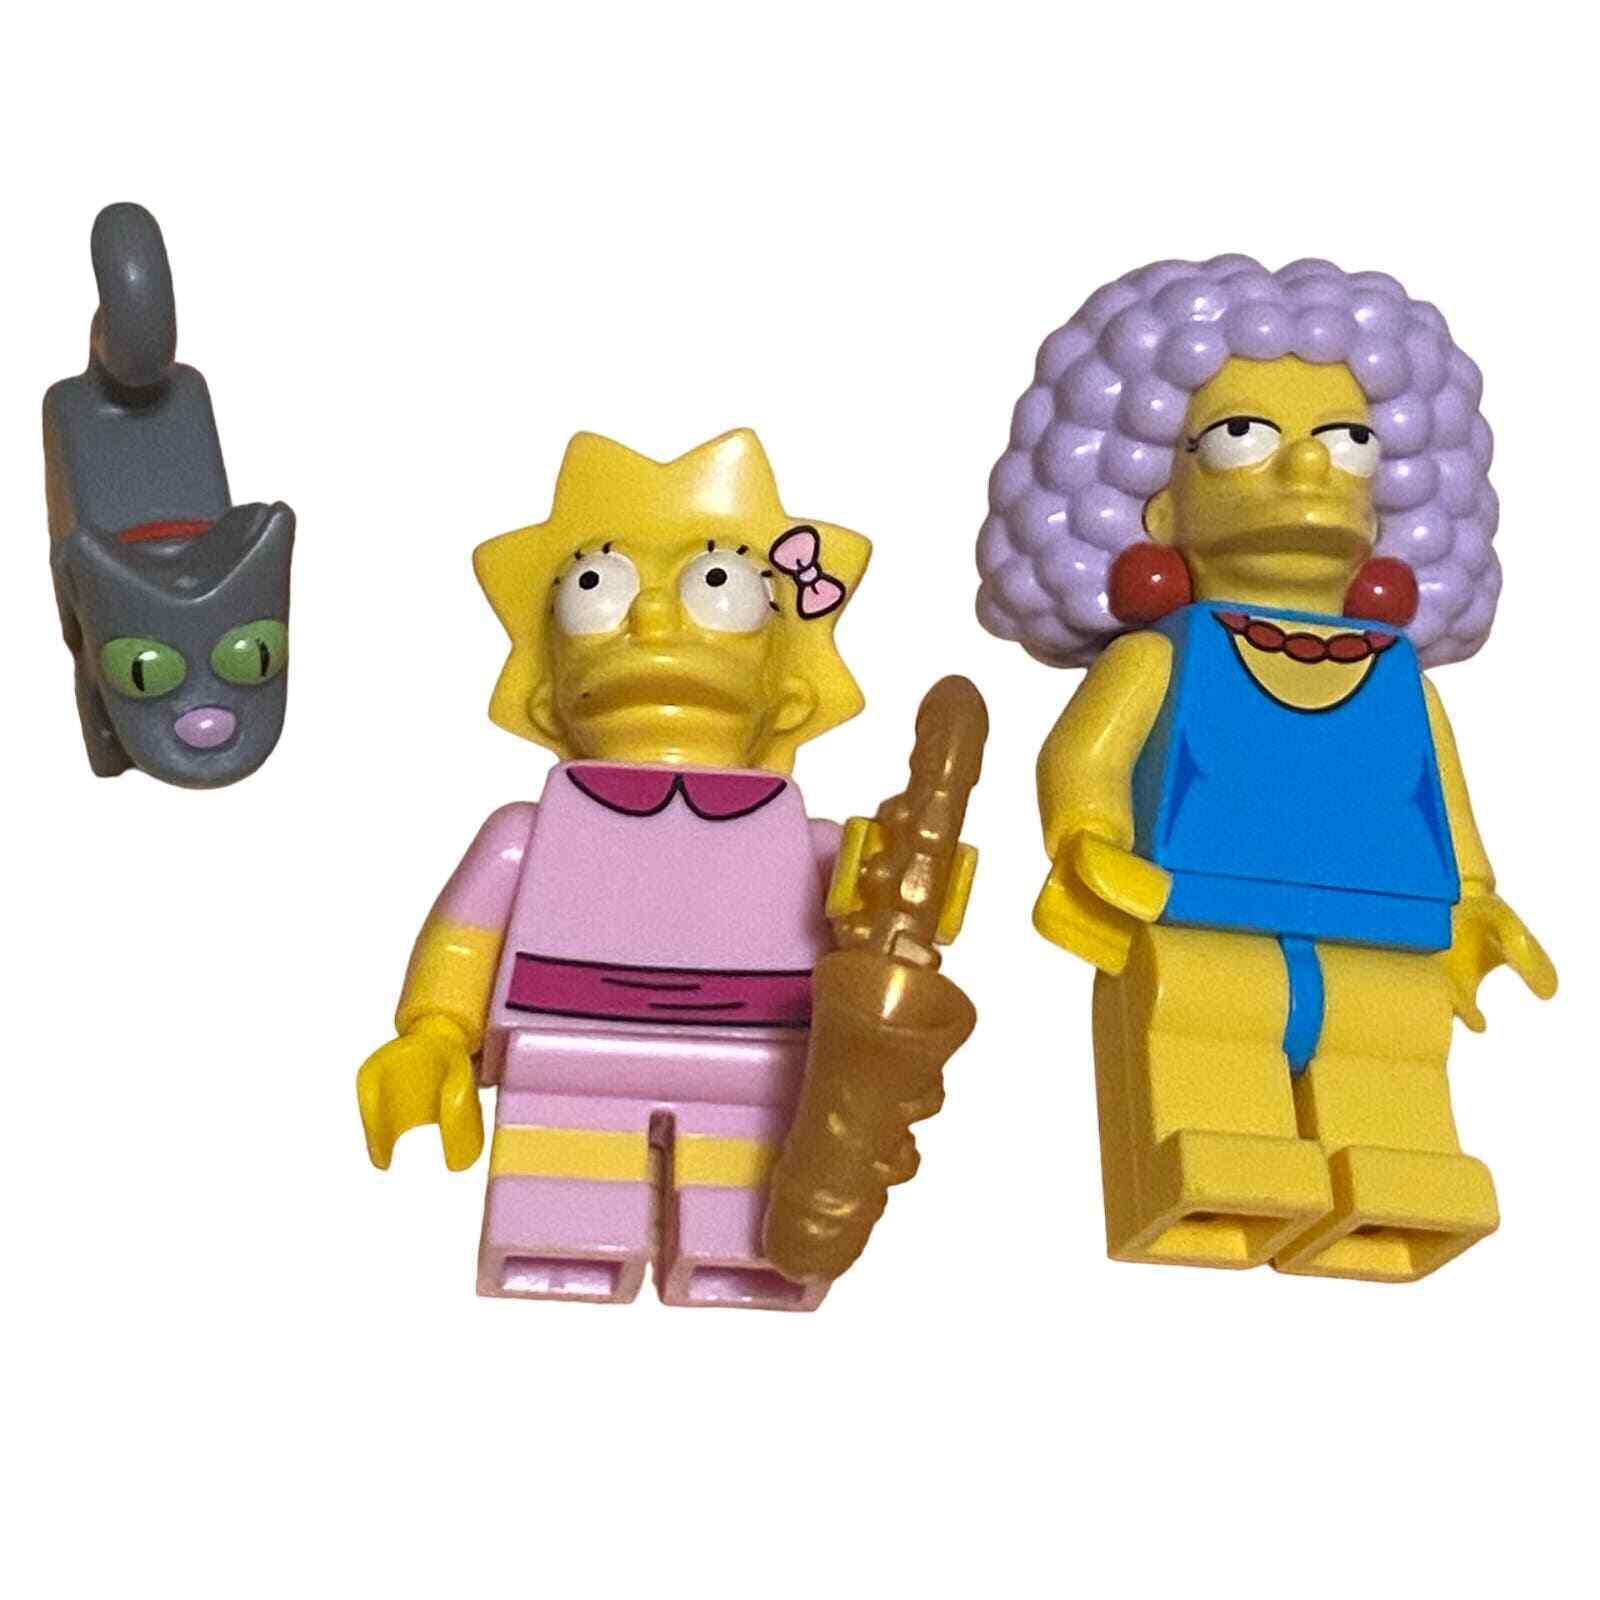 Lego The Simpsons Selma & Lisa Saxophone Snowball Cat Minifigures Lot